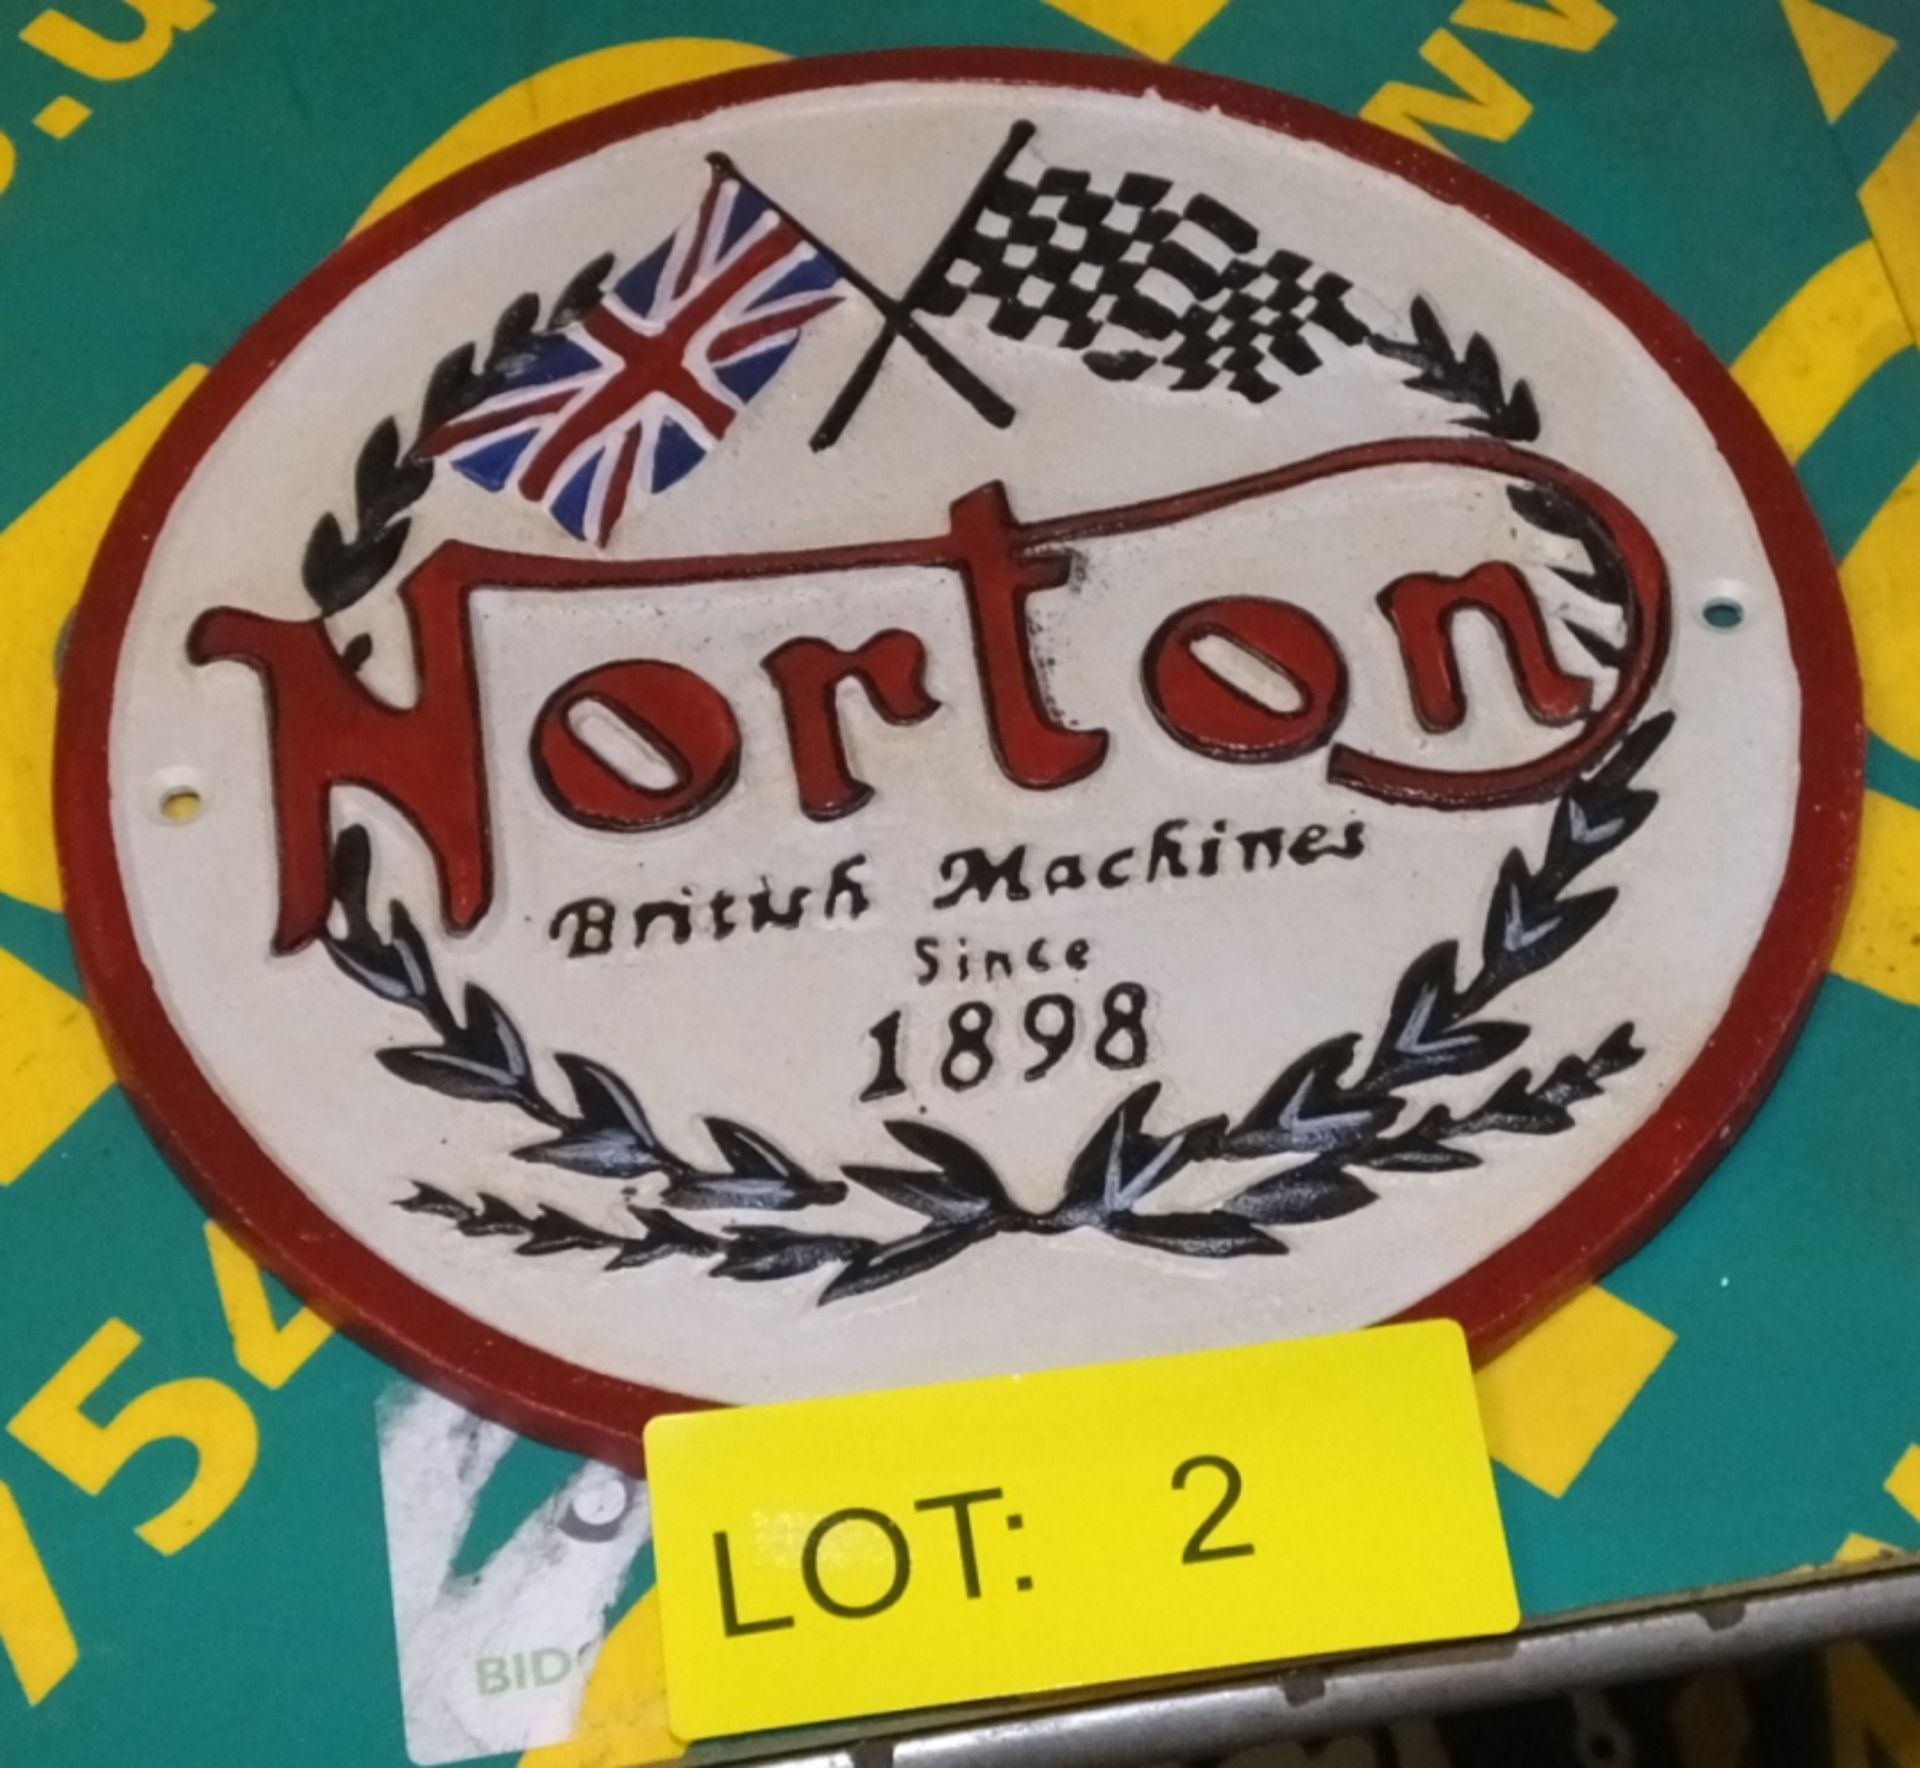 Cast sign - Norton